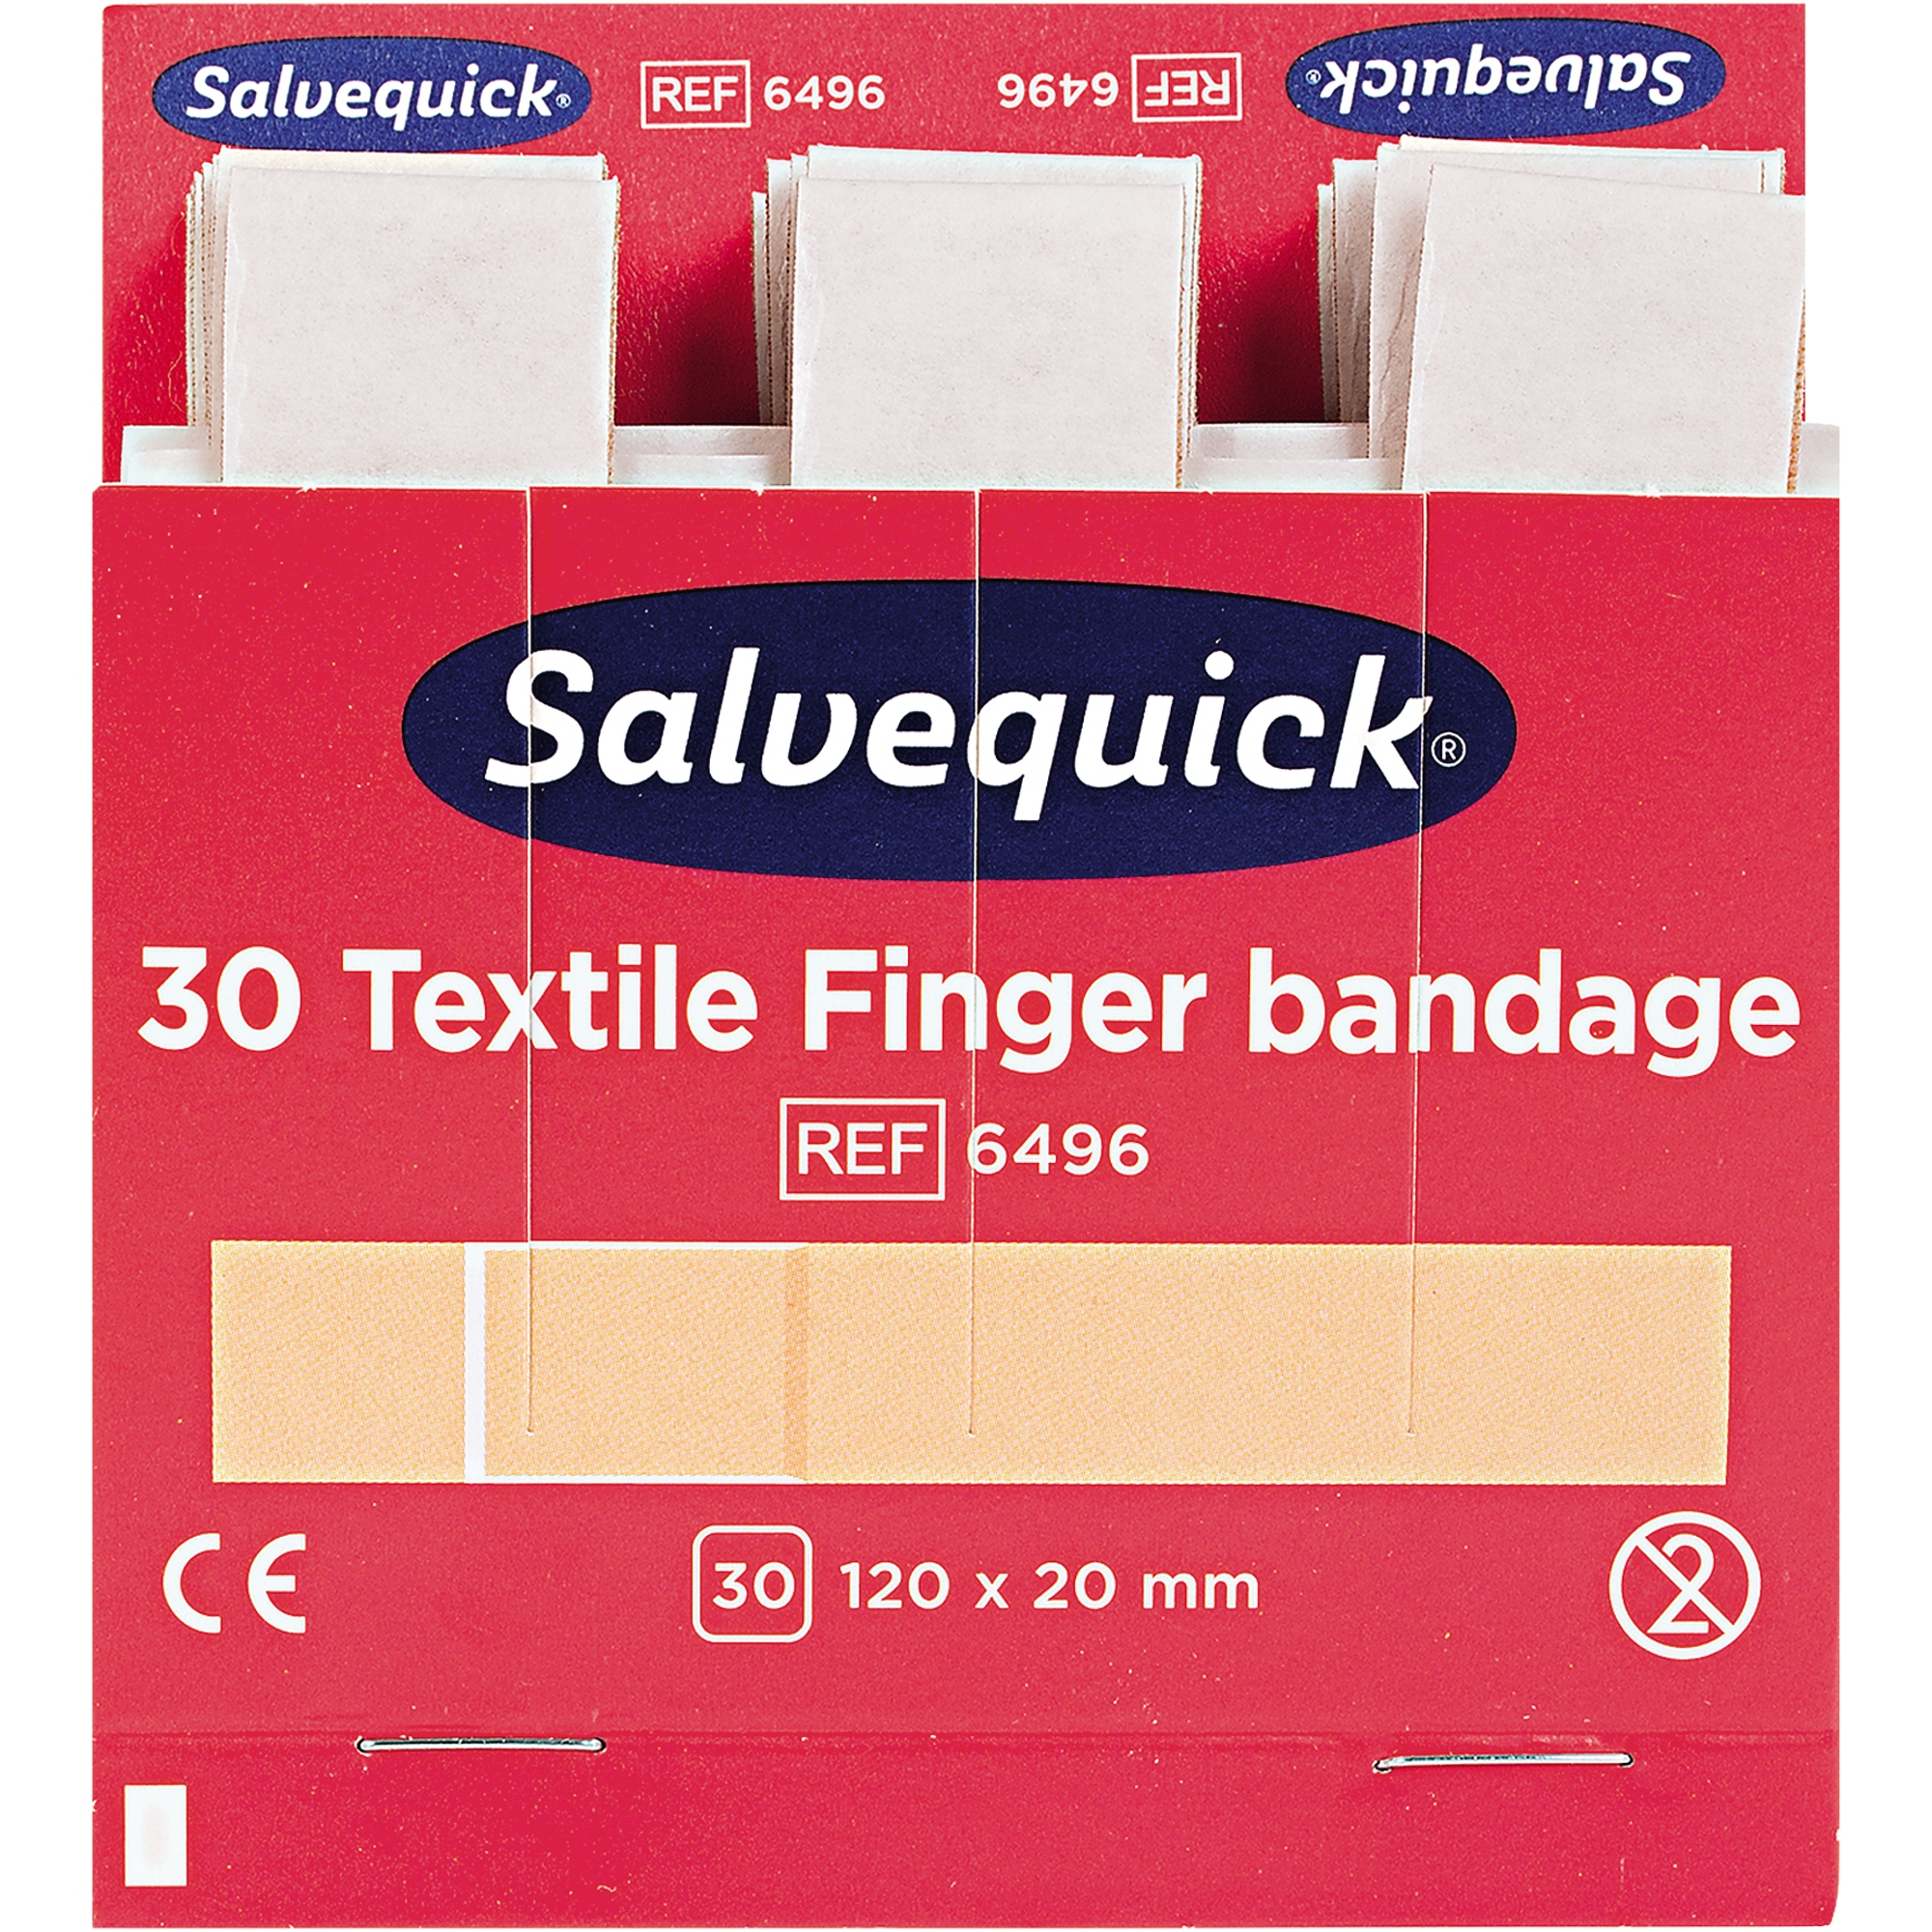 Salvequick Fingerverband 6496 elastisch 30 St.Pack.